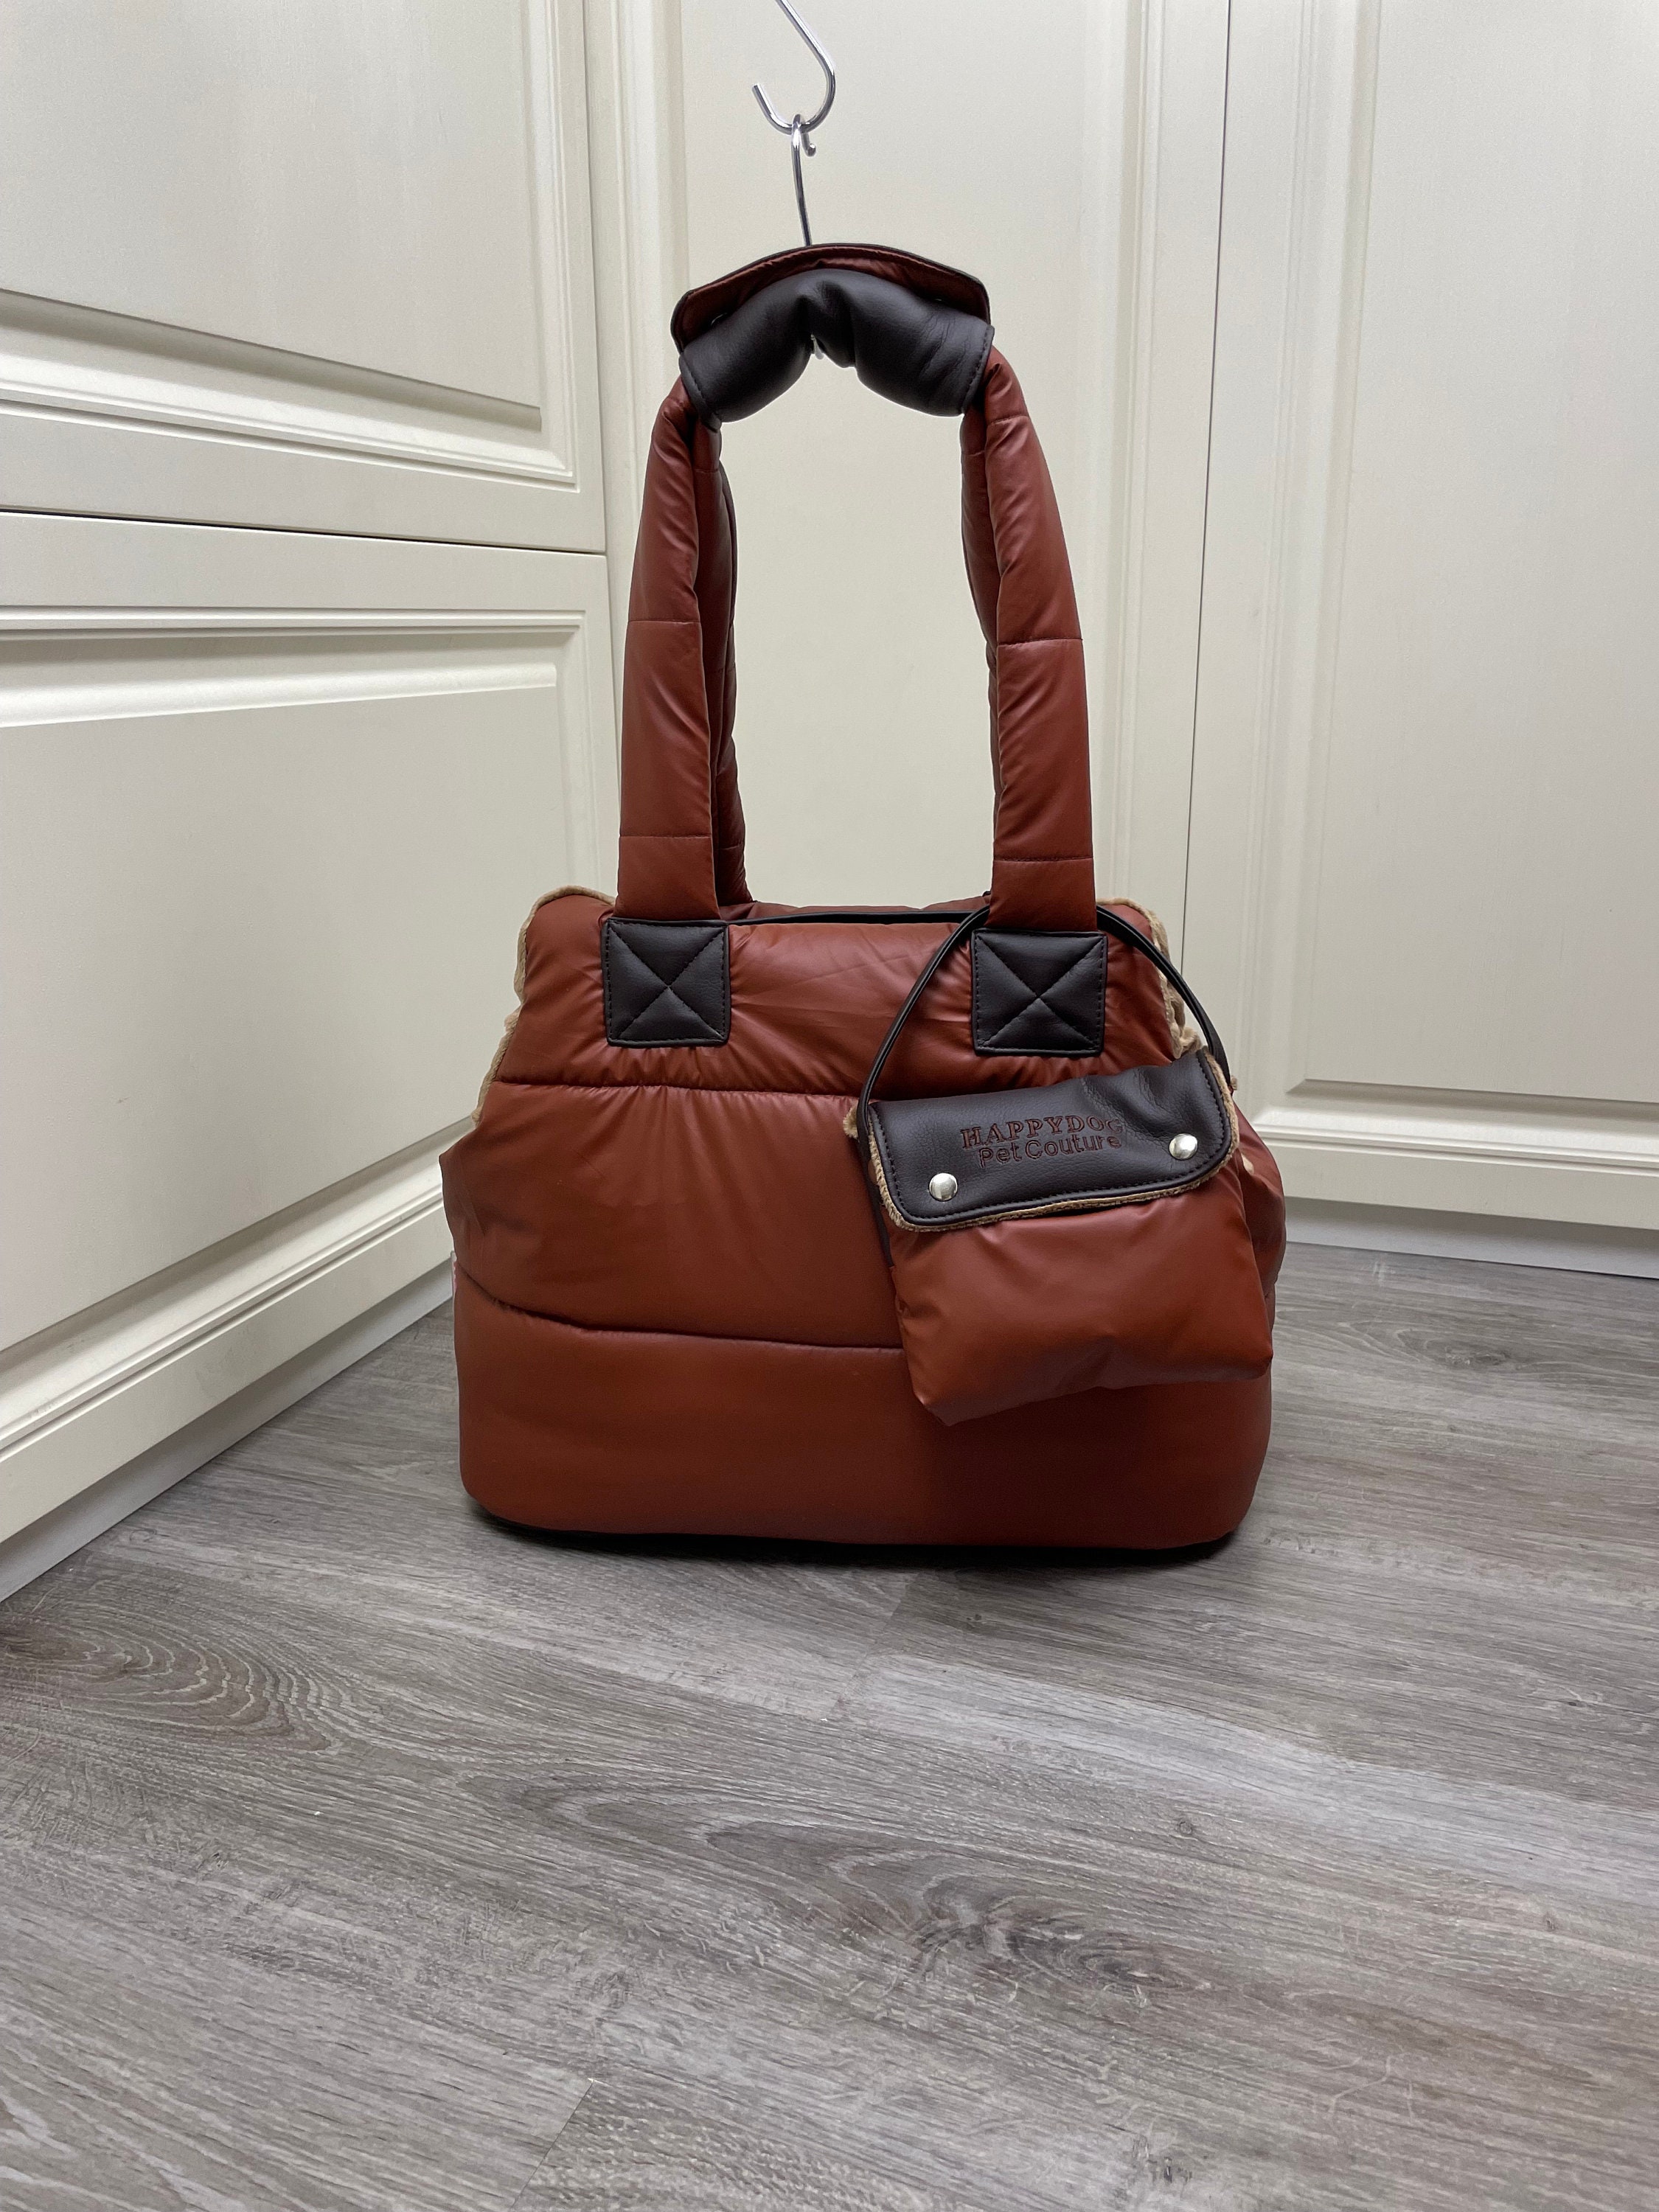 Chewy Brown Designer Dog Bag Handbag